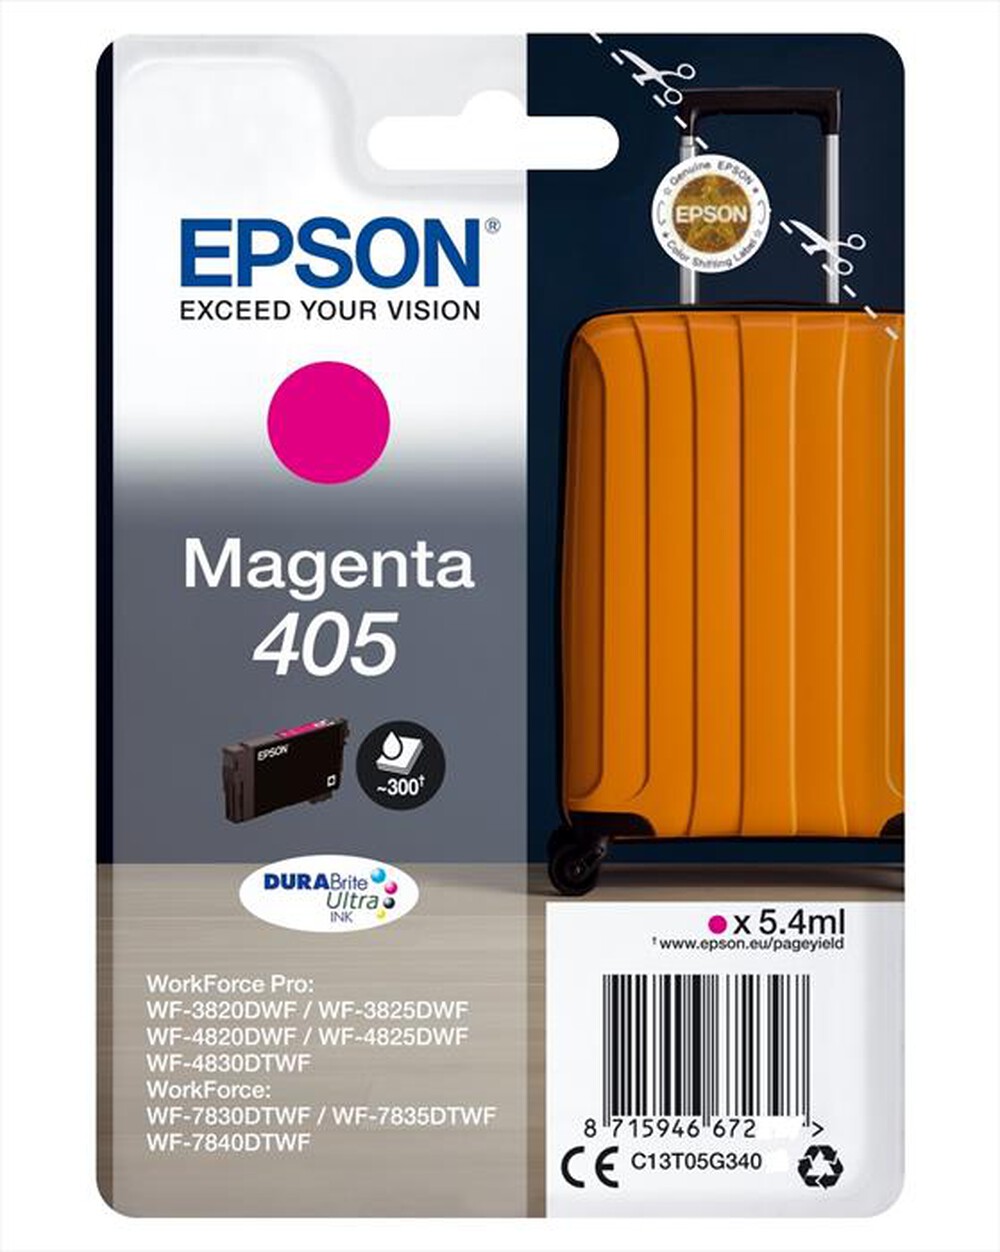 "EPSON - EPSON INCHIOSTRO  SERIE VALIGIA 405 STD MAGENTA-Magenta std"